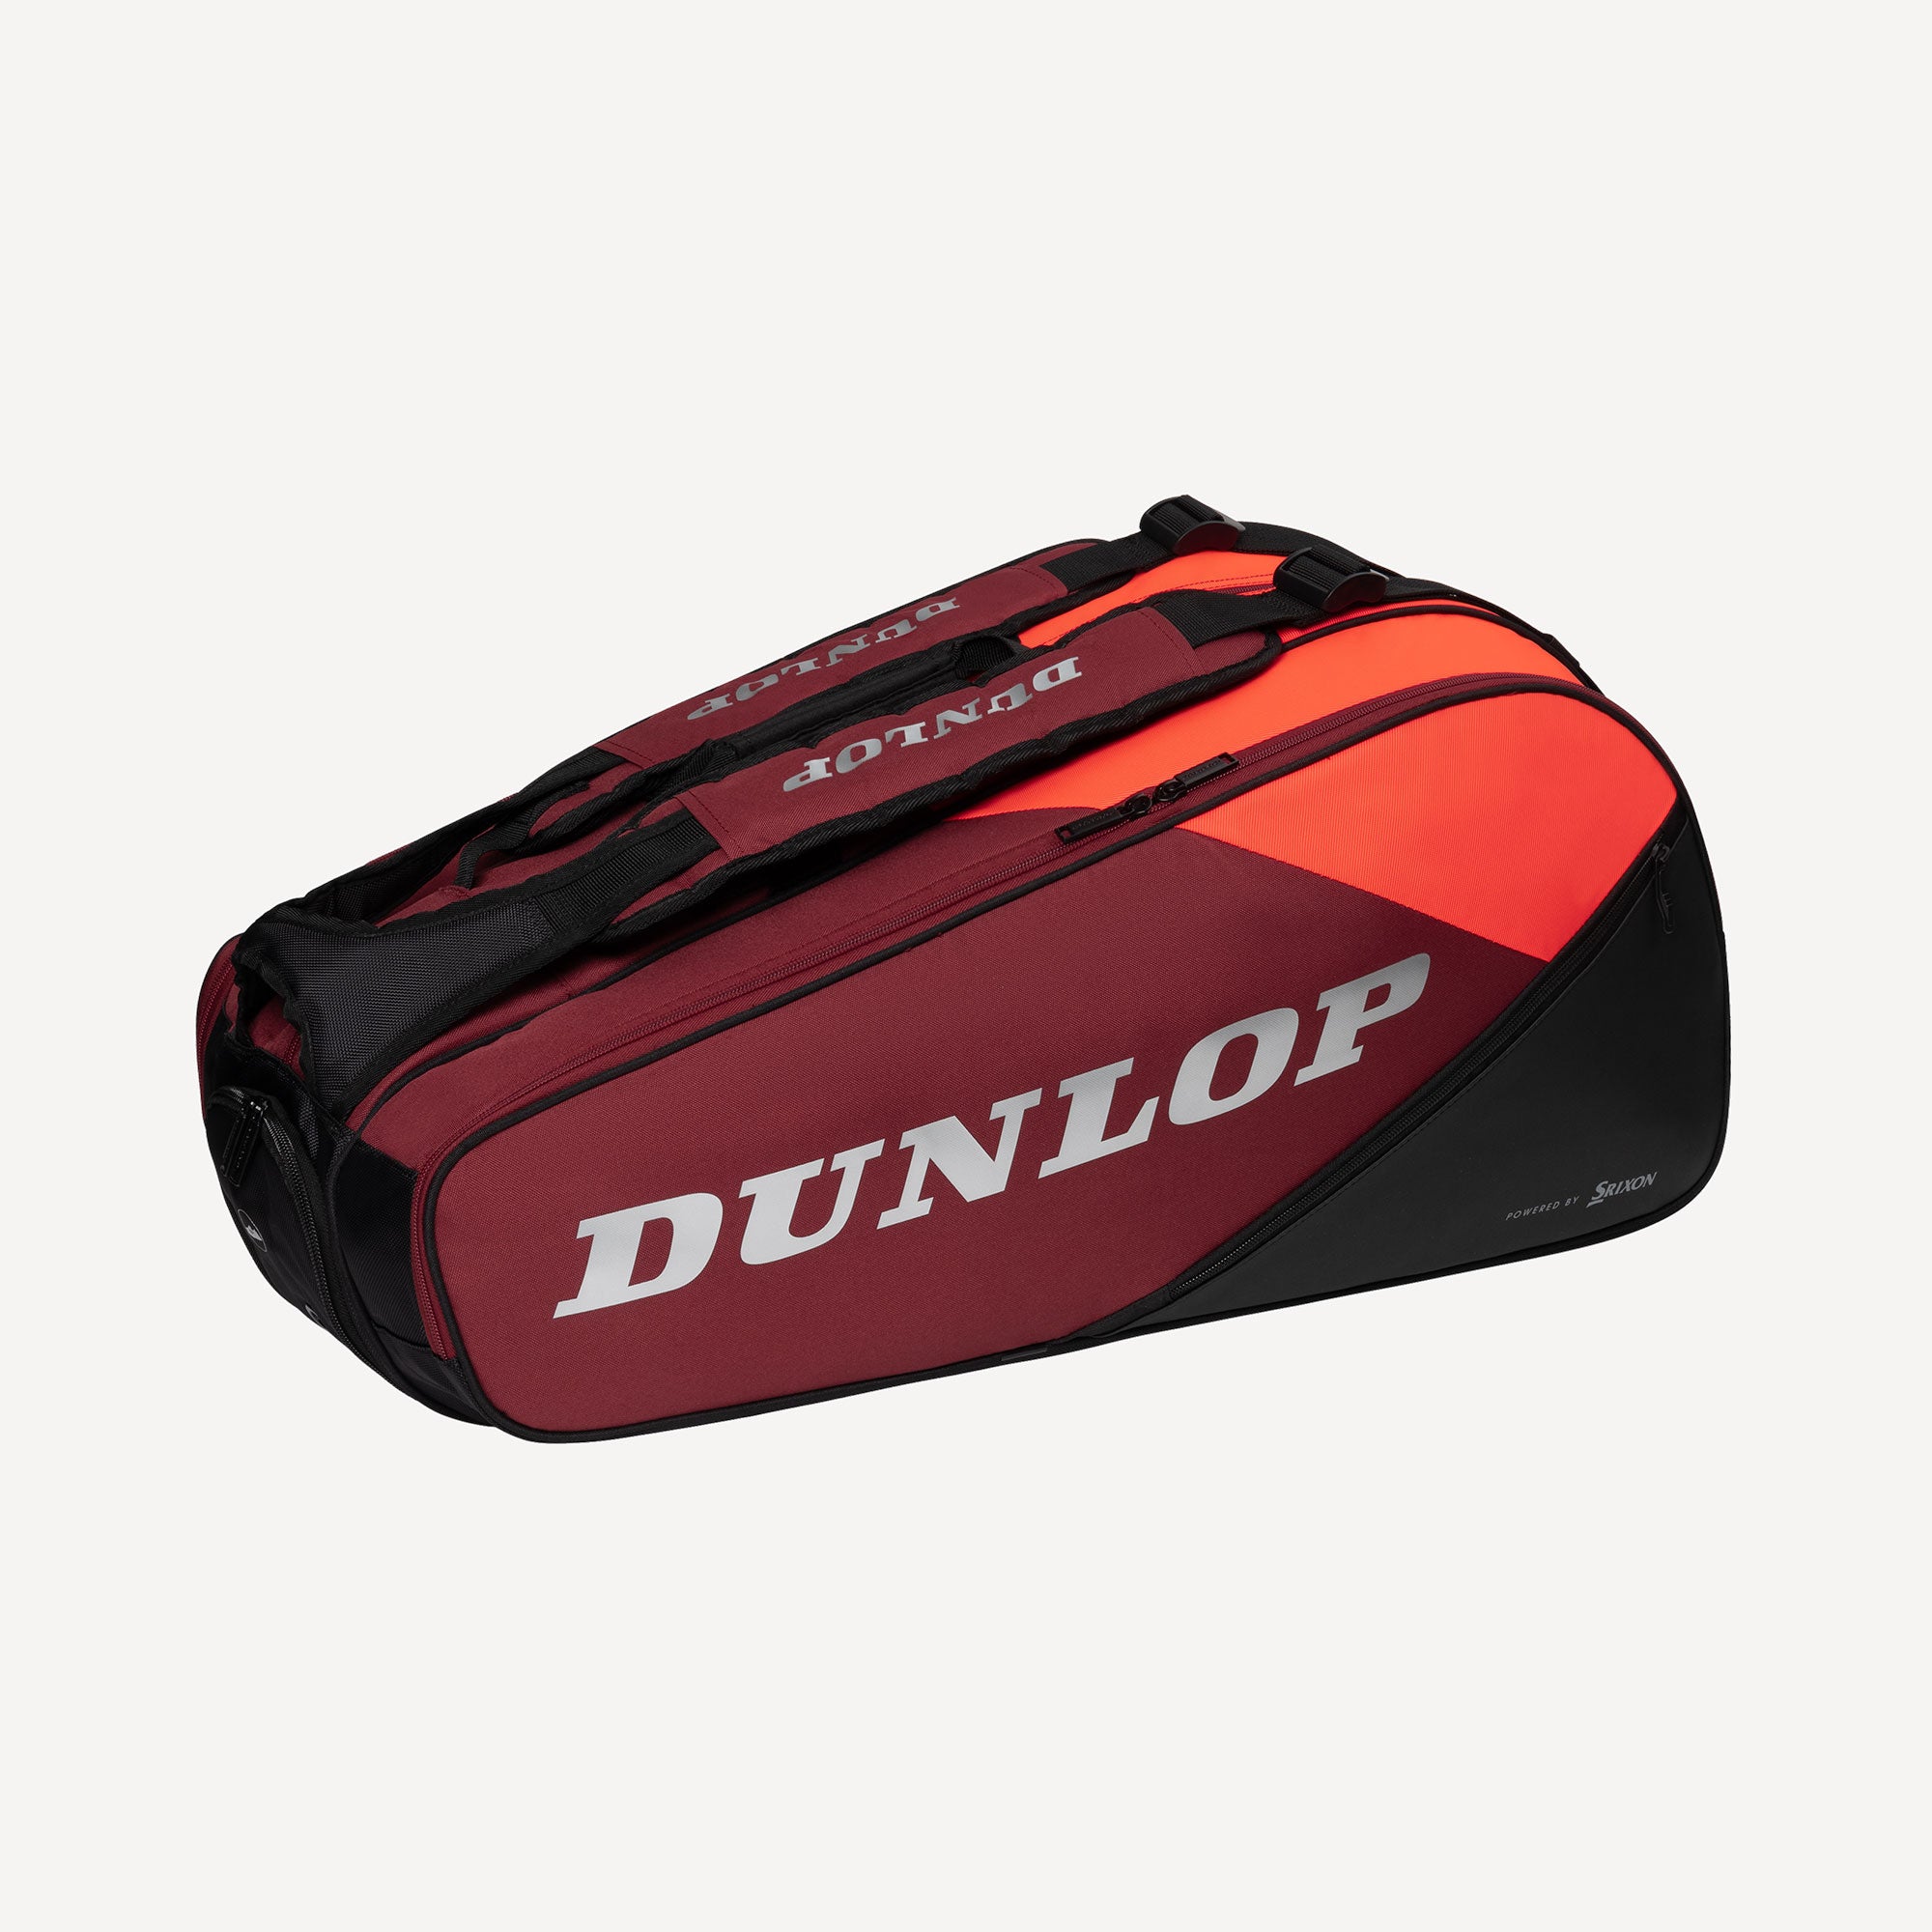 Dunlop CX Performance 8 Racket Tennis Bag - Red (2)